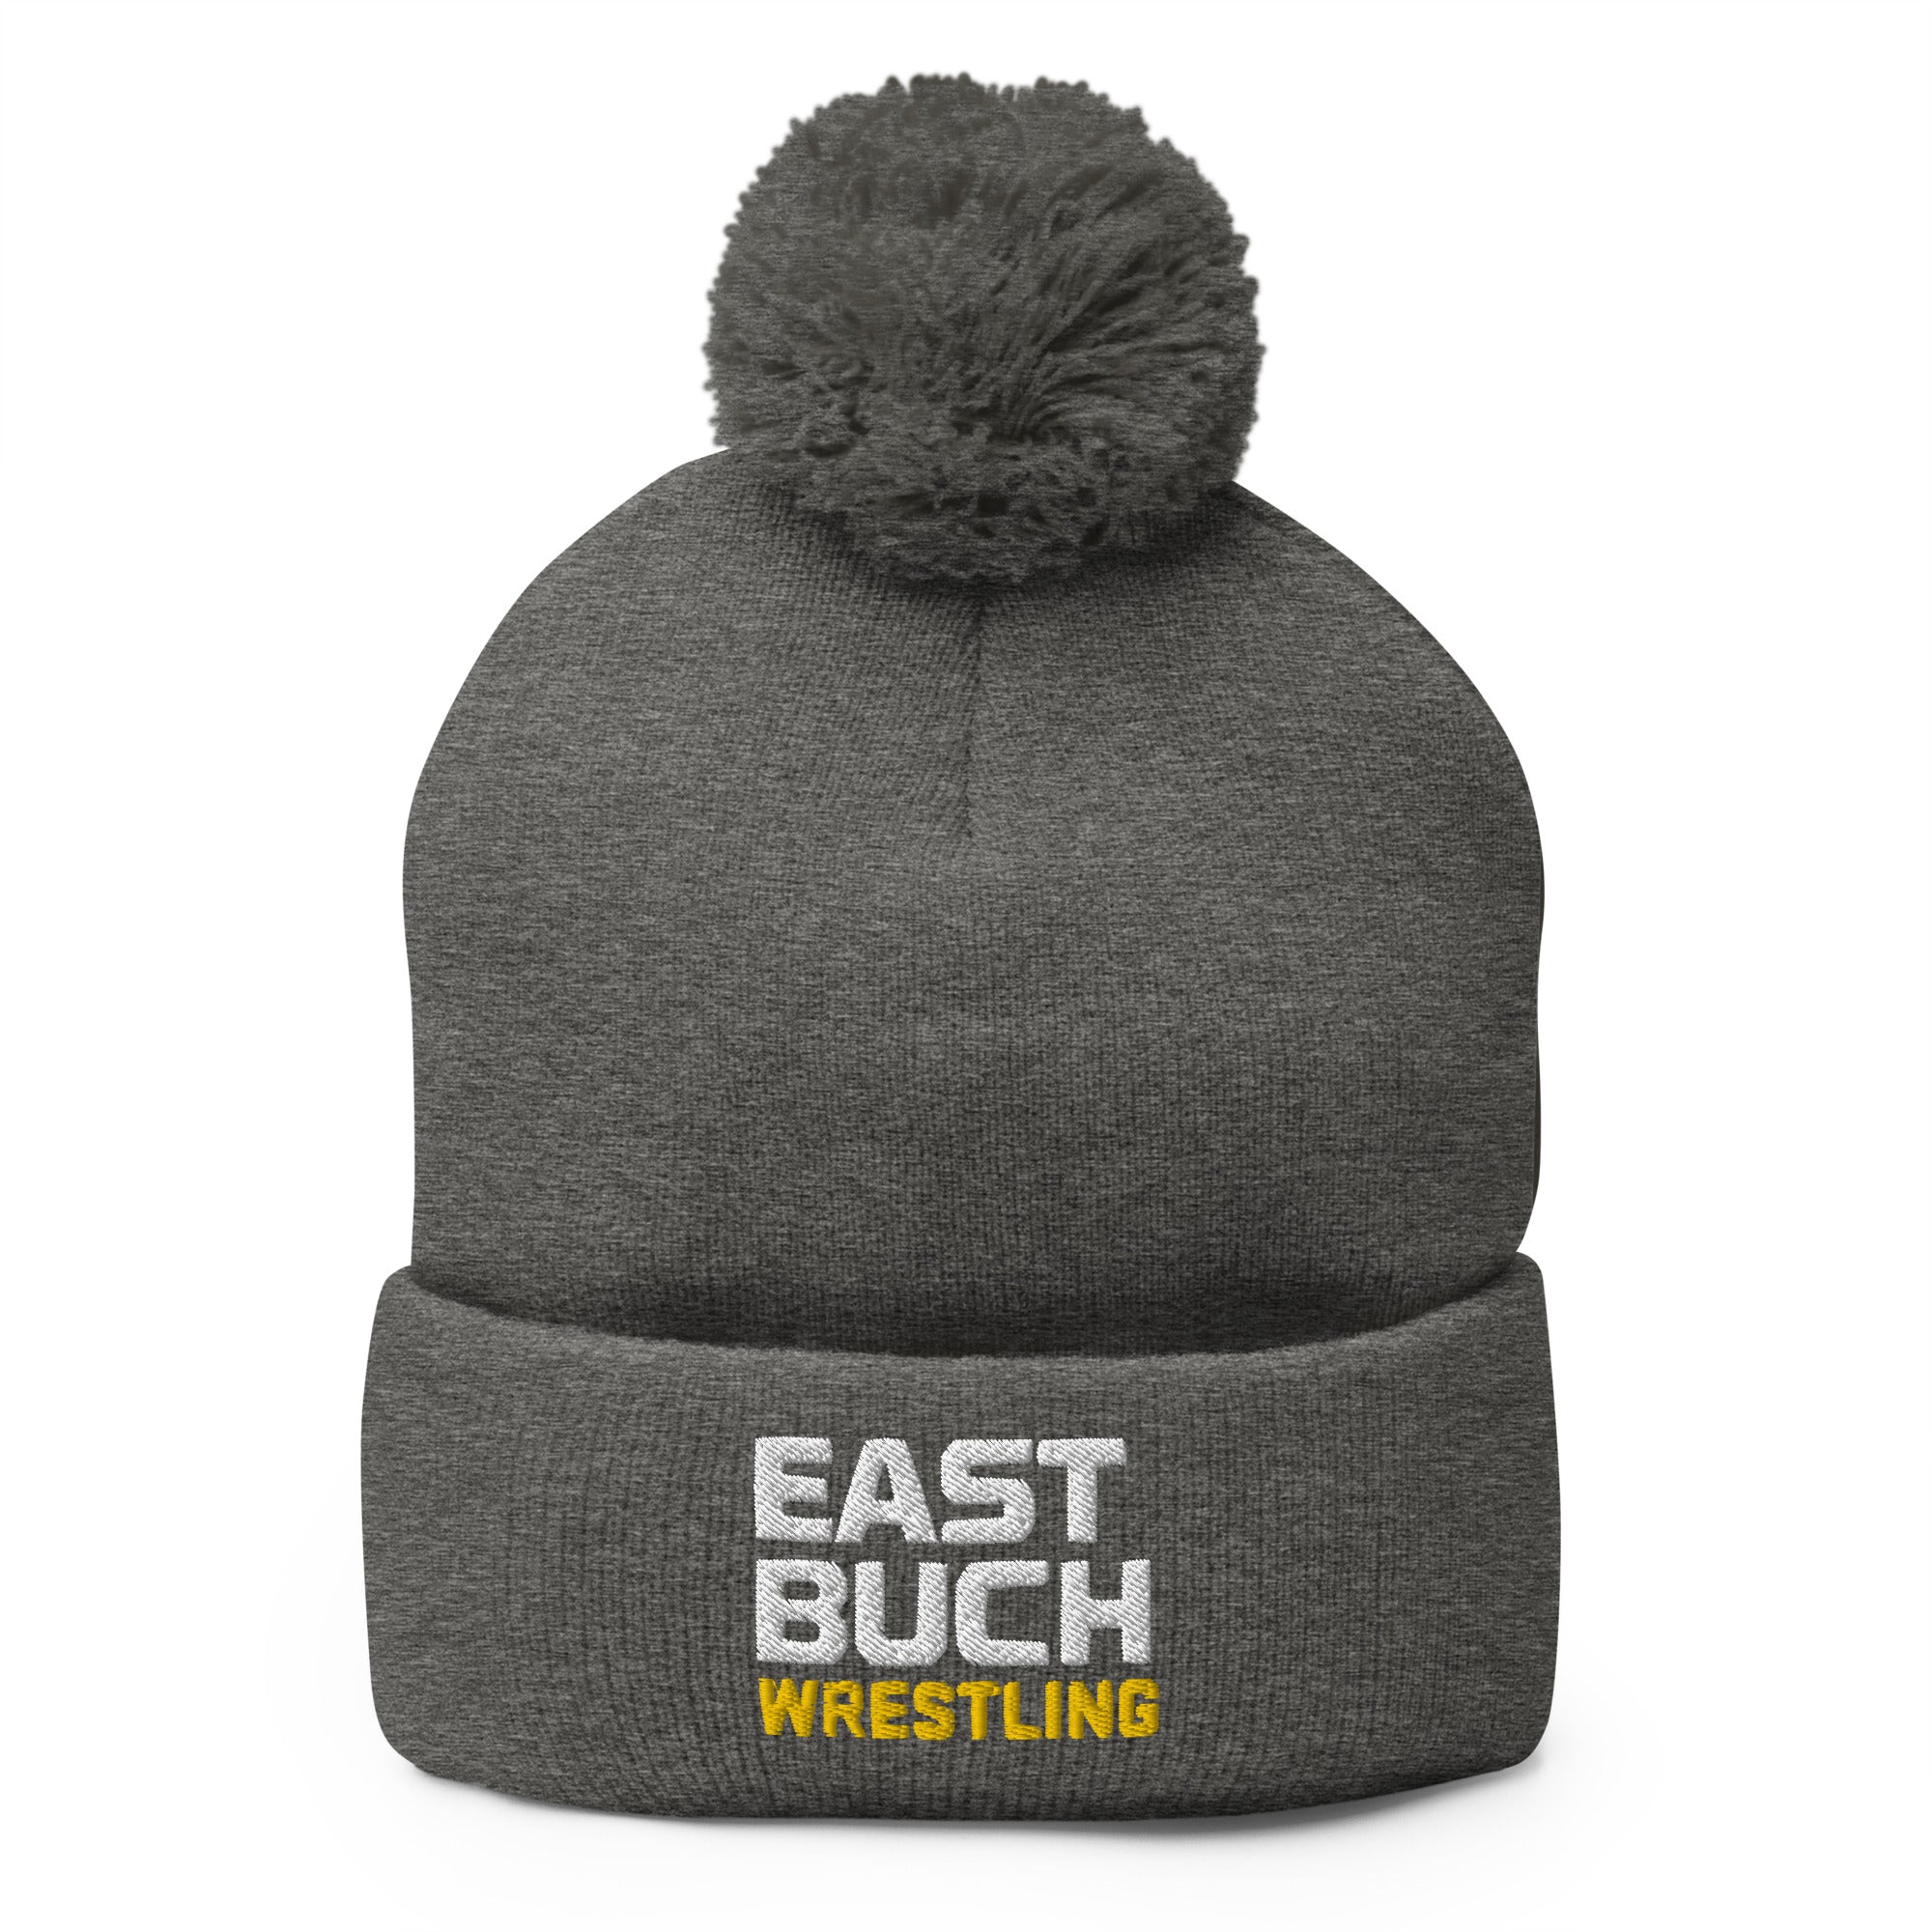 East Buchanan Wrestling Pom-Pom Knit Cap